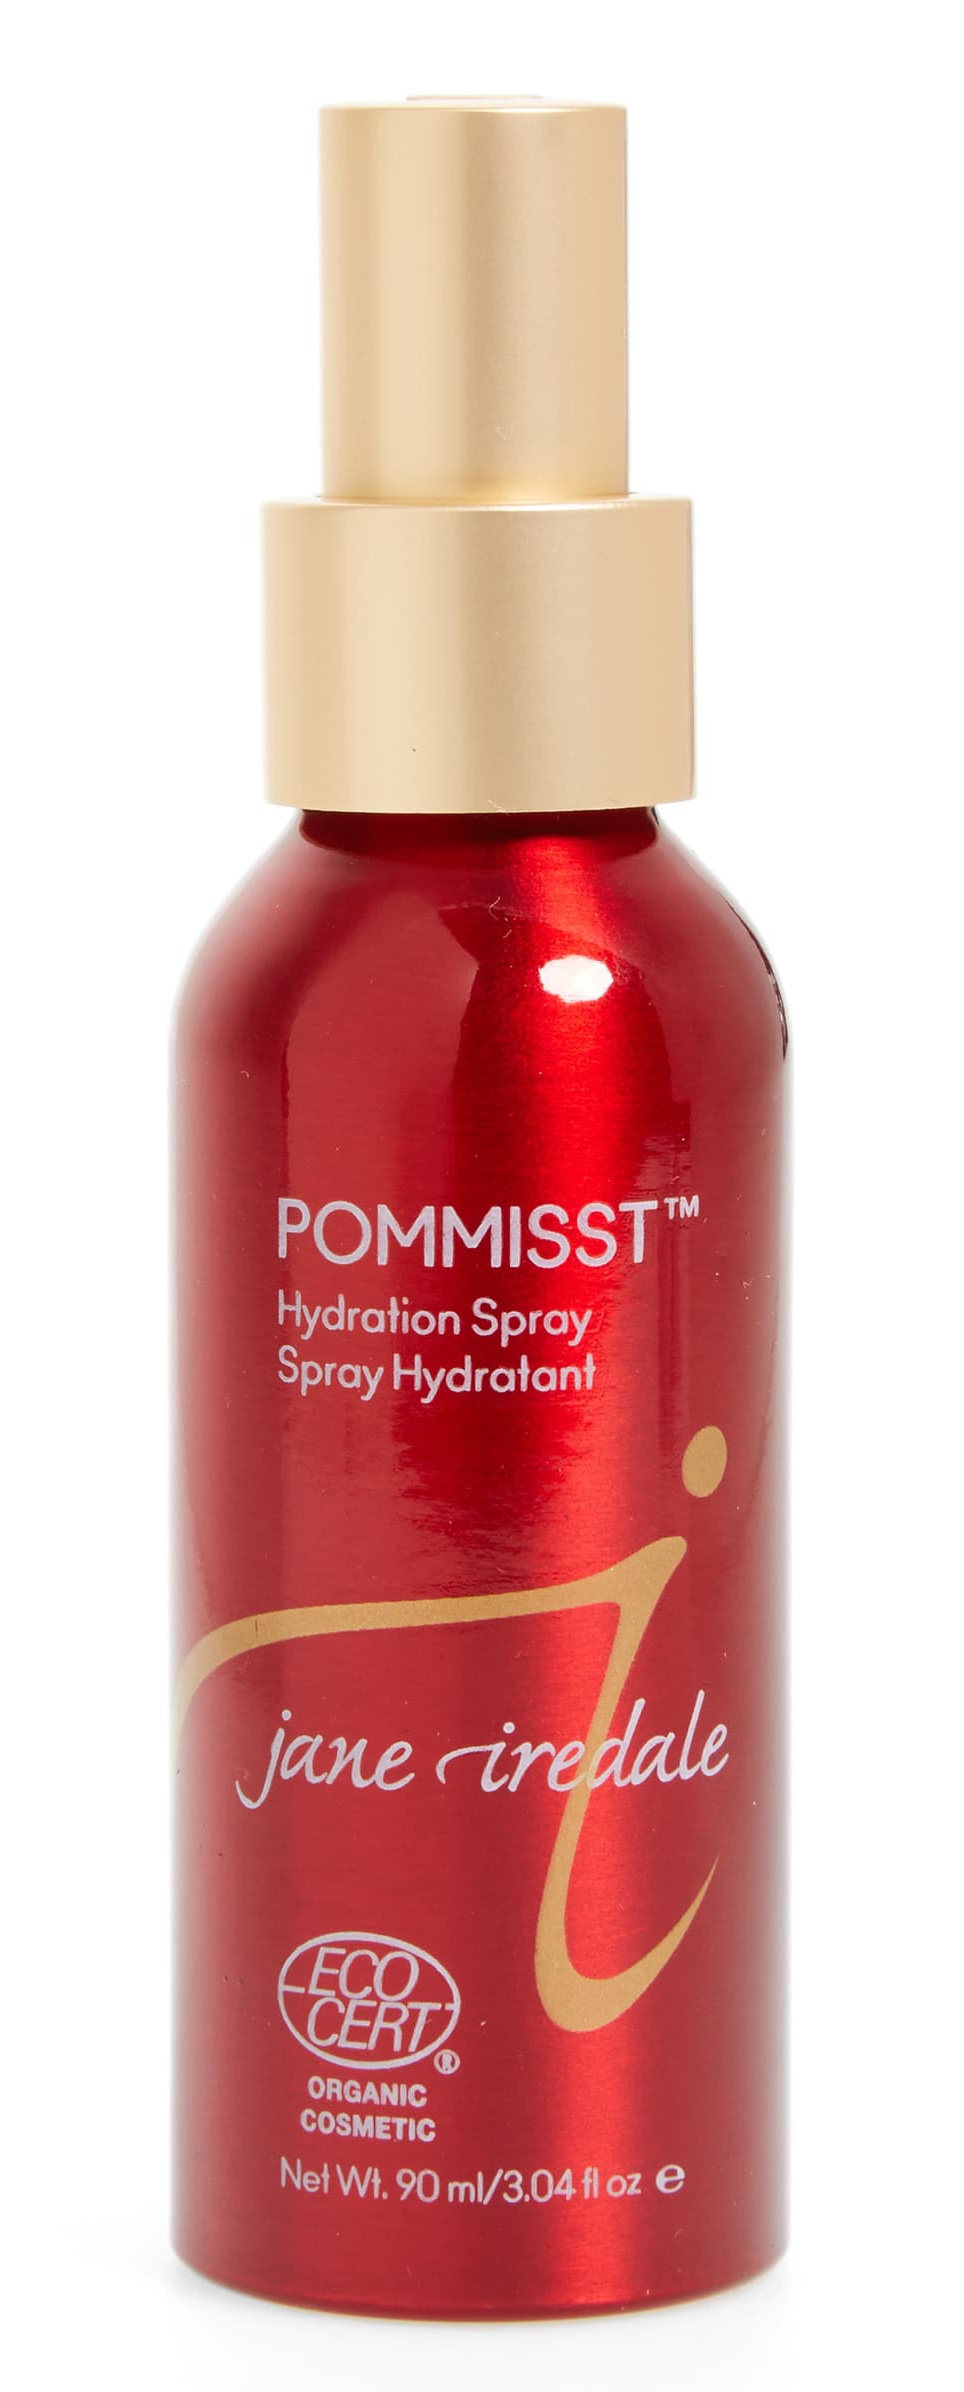 jane iredale Pommisst™ Hydration Spray